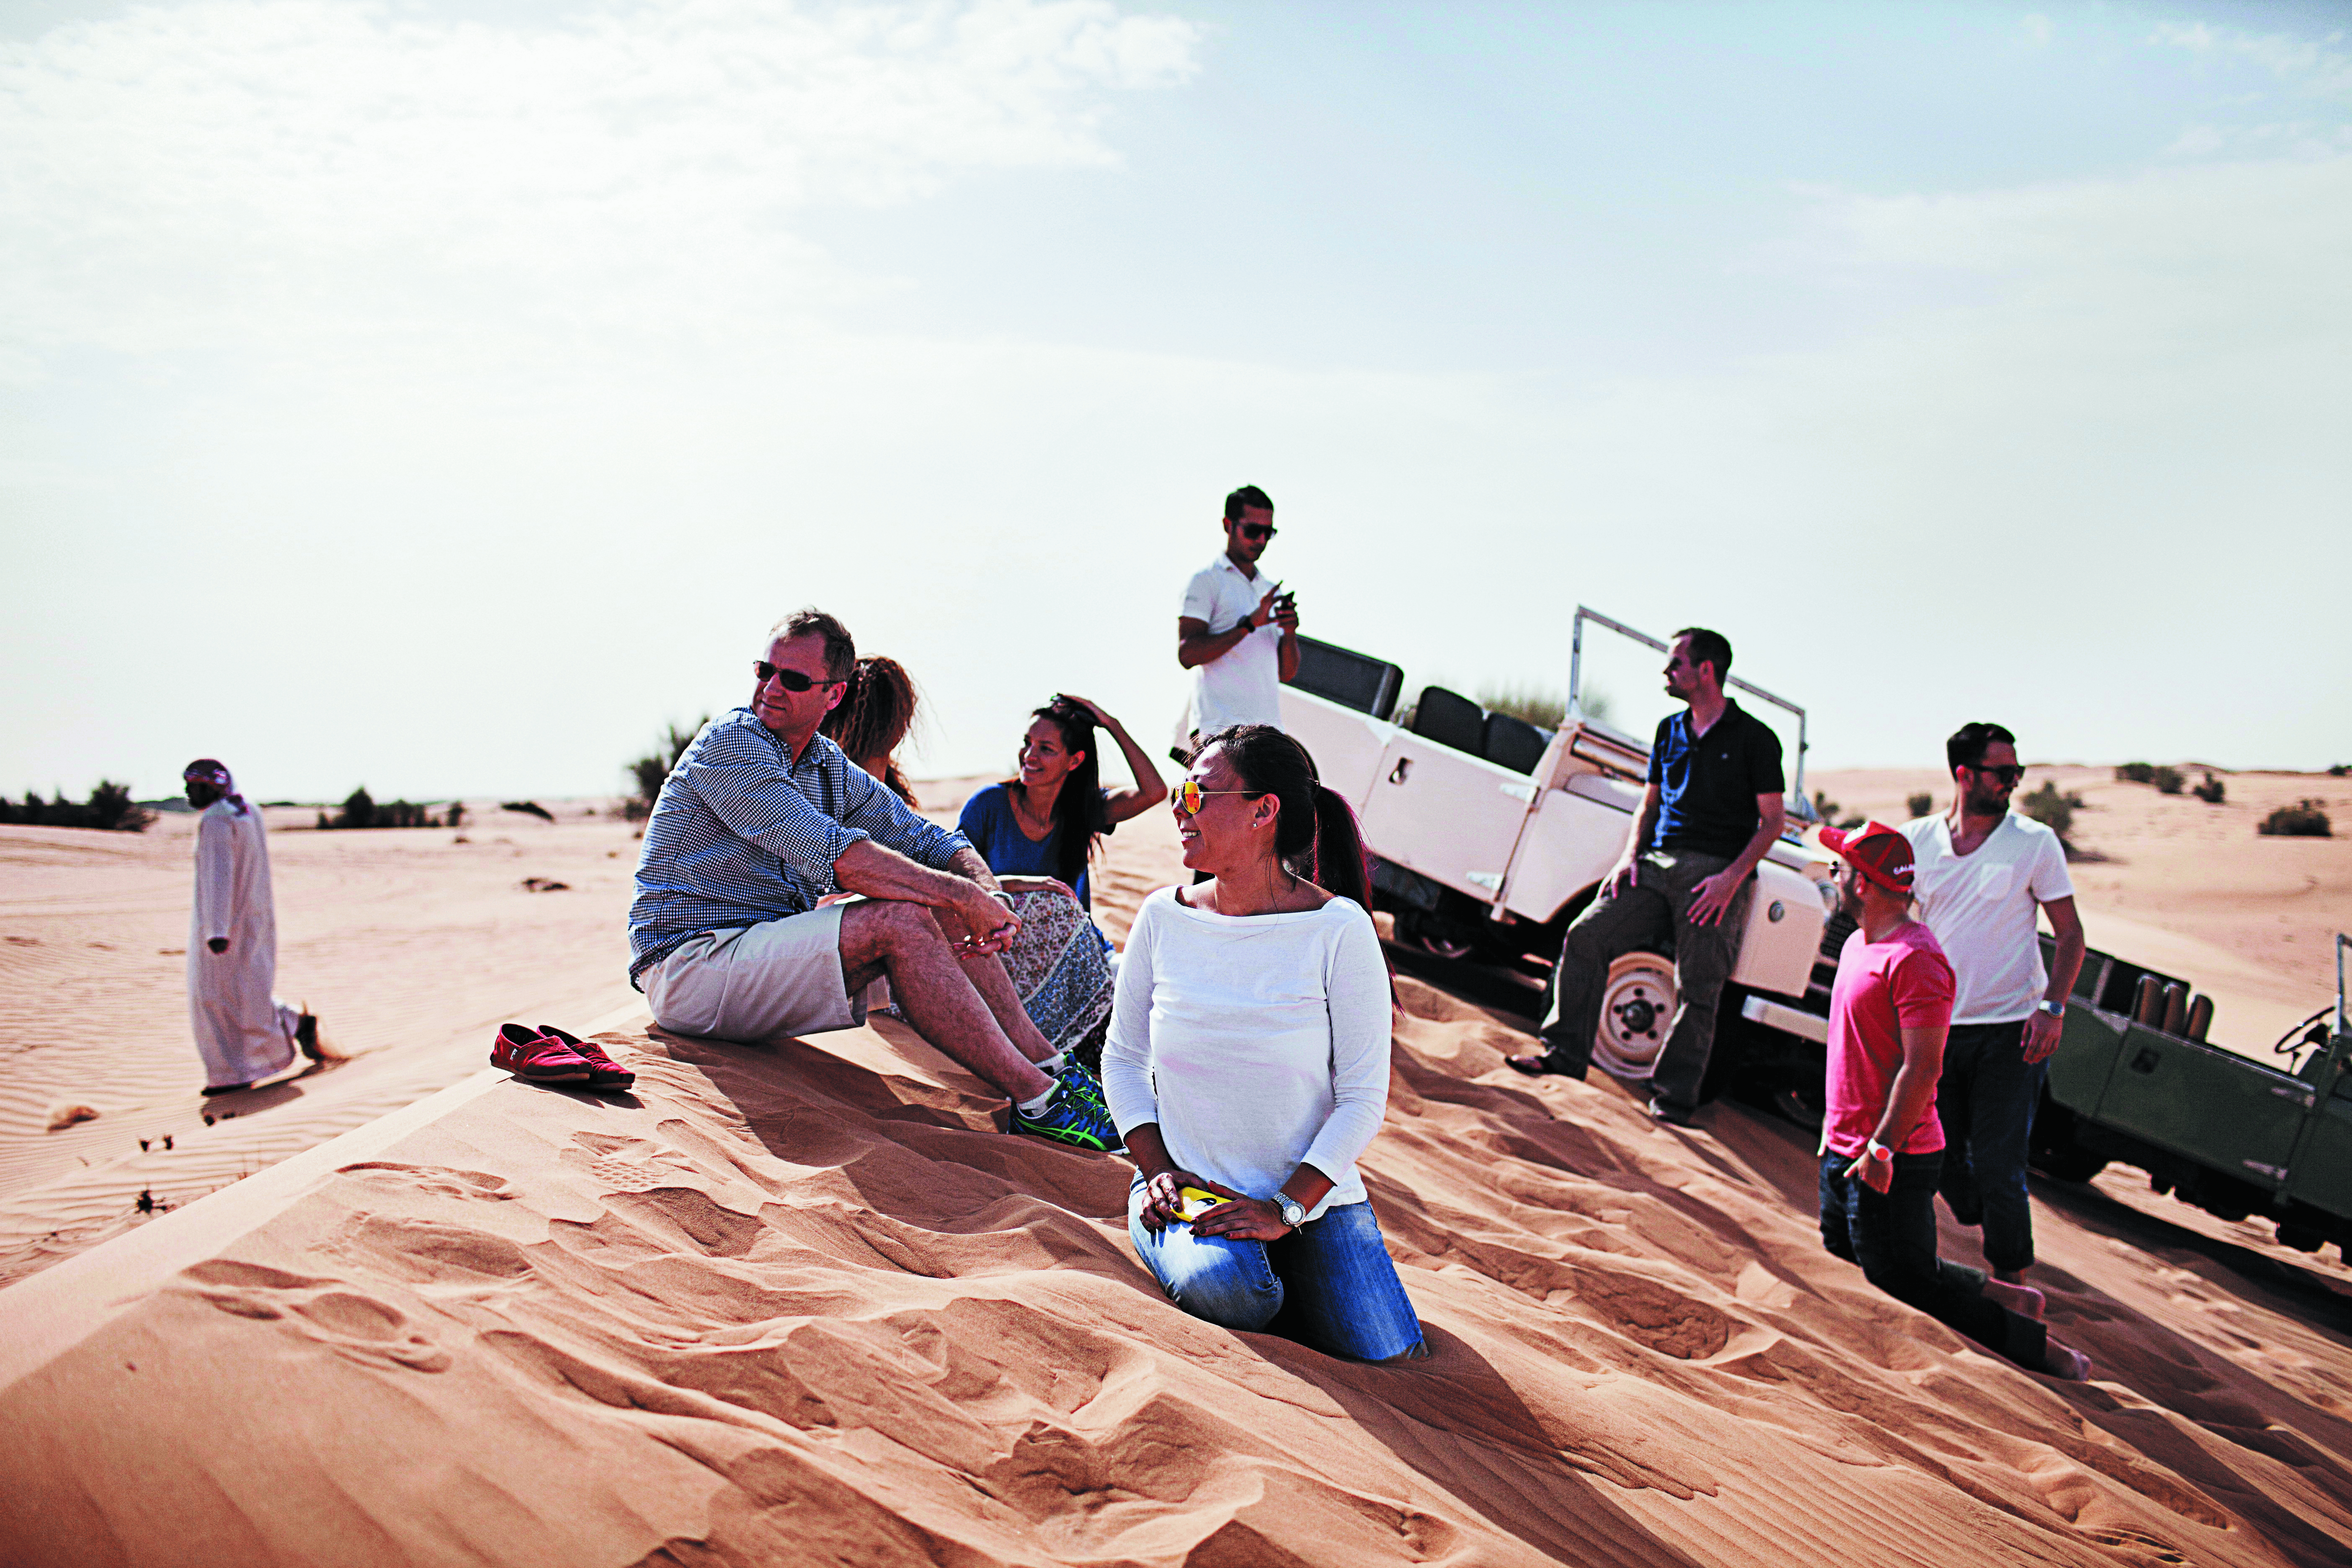 Adventure_Desert Safari_Tourists_Dubai [press]